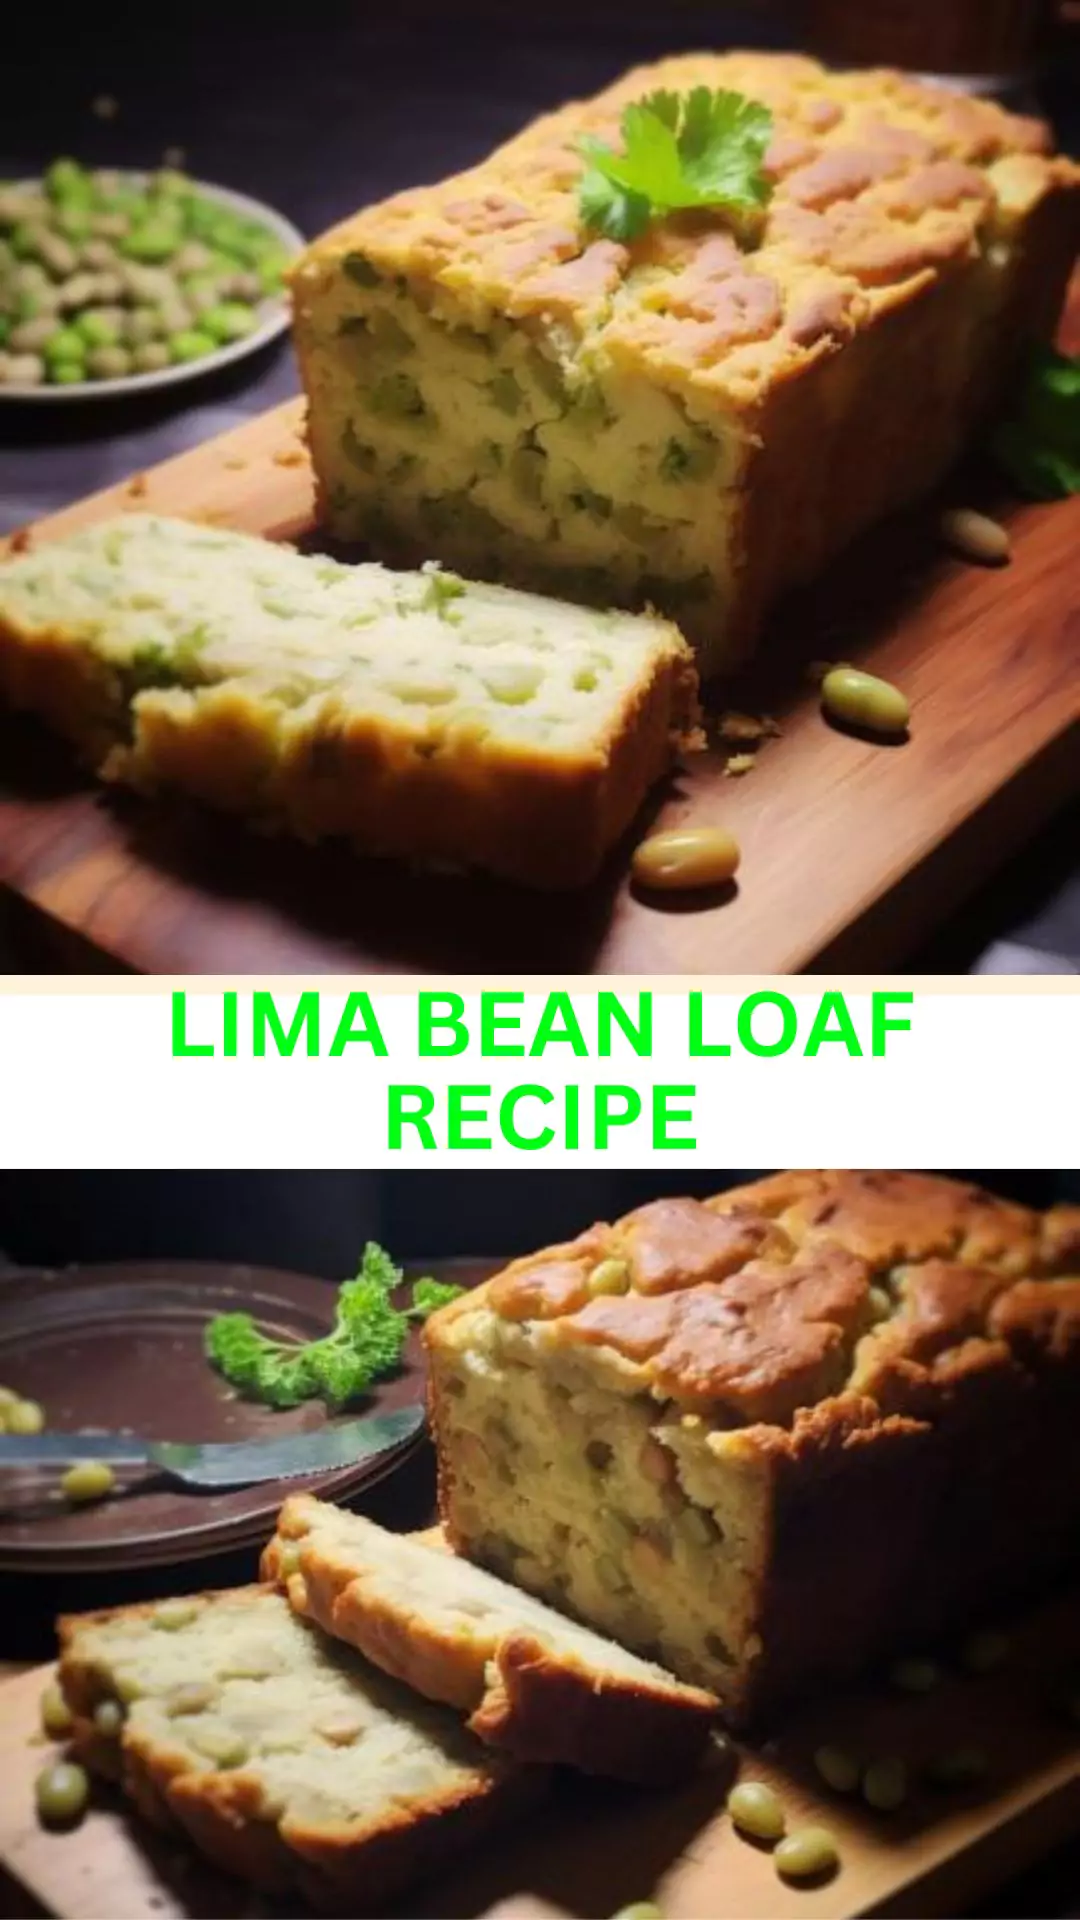 Best Lima Bean Loaf Recipe